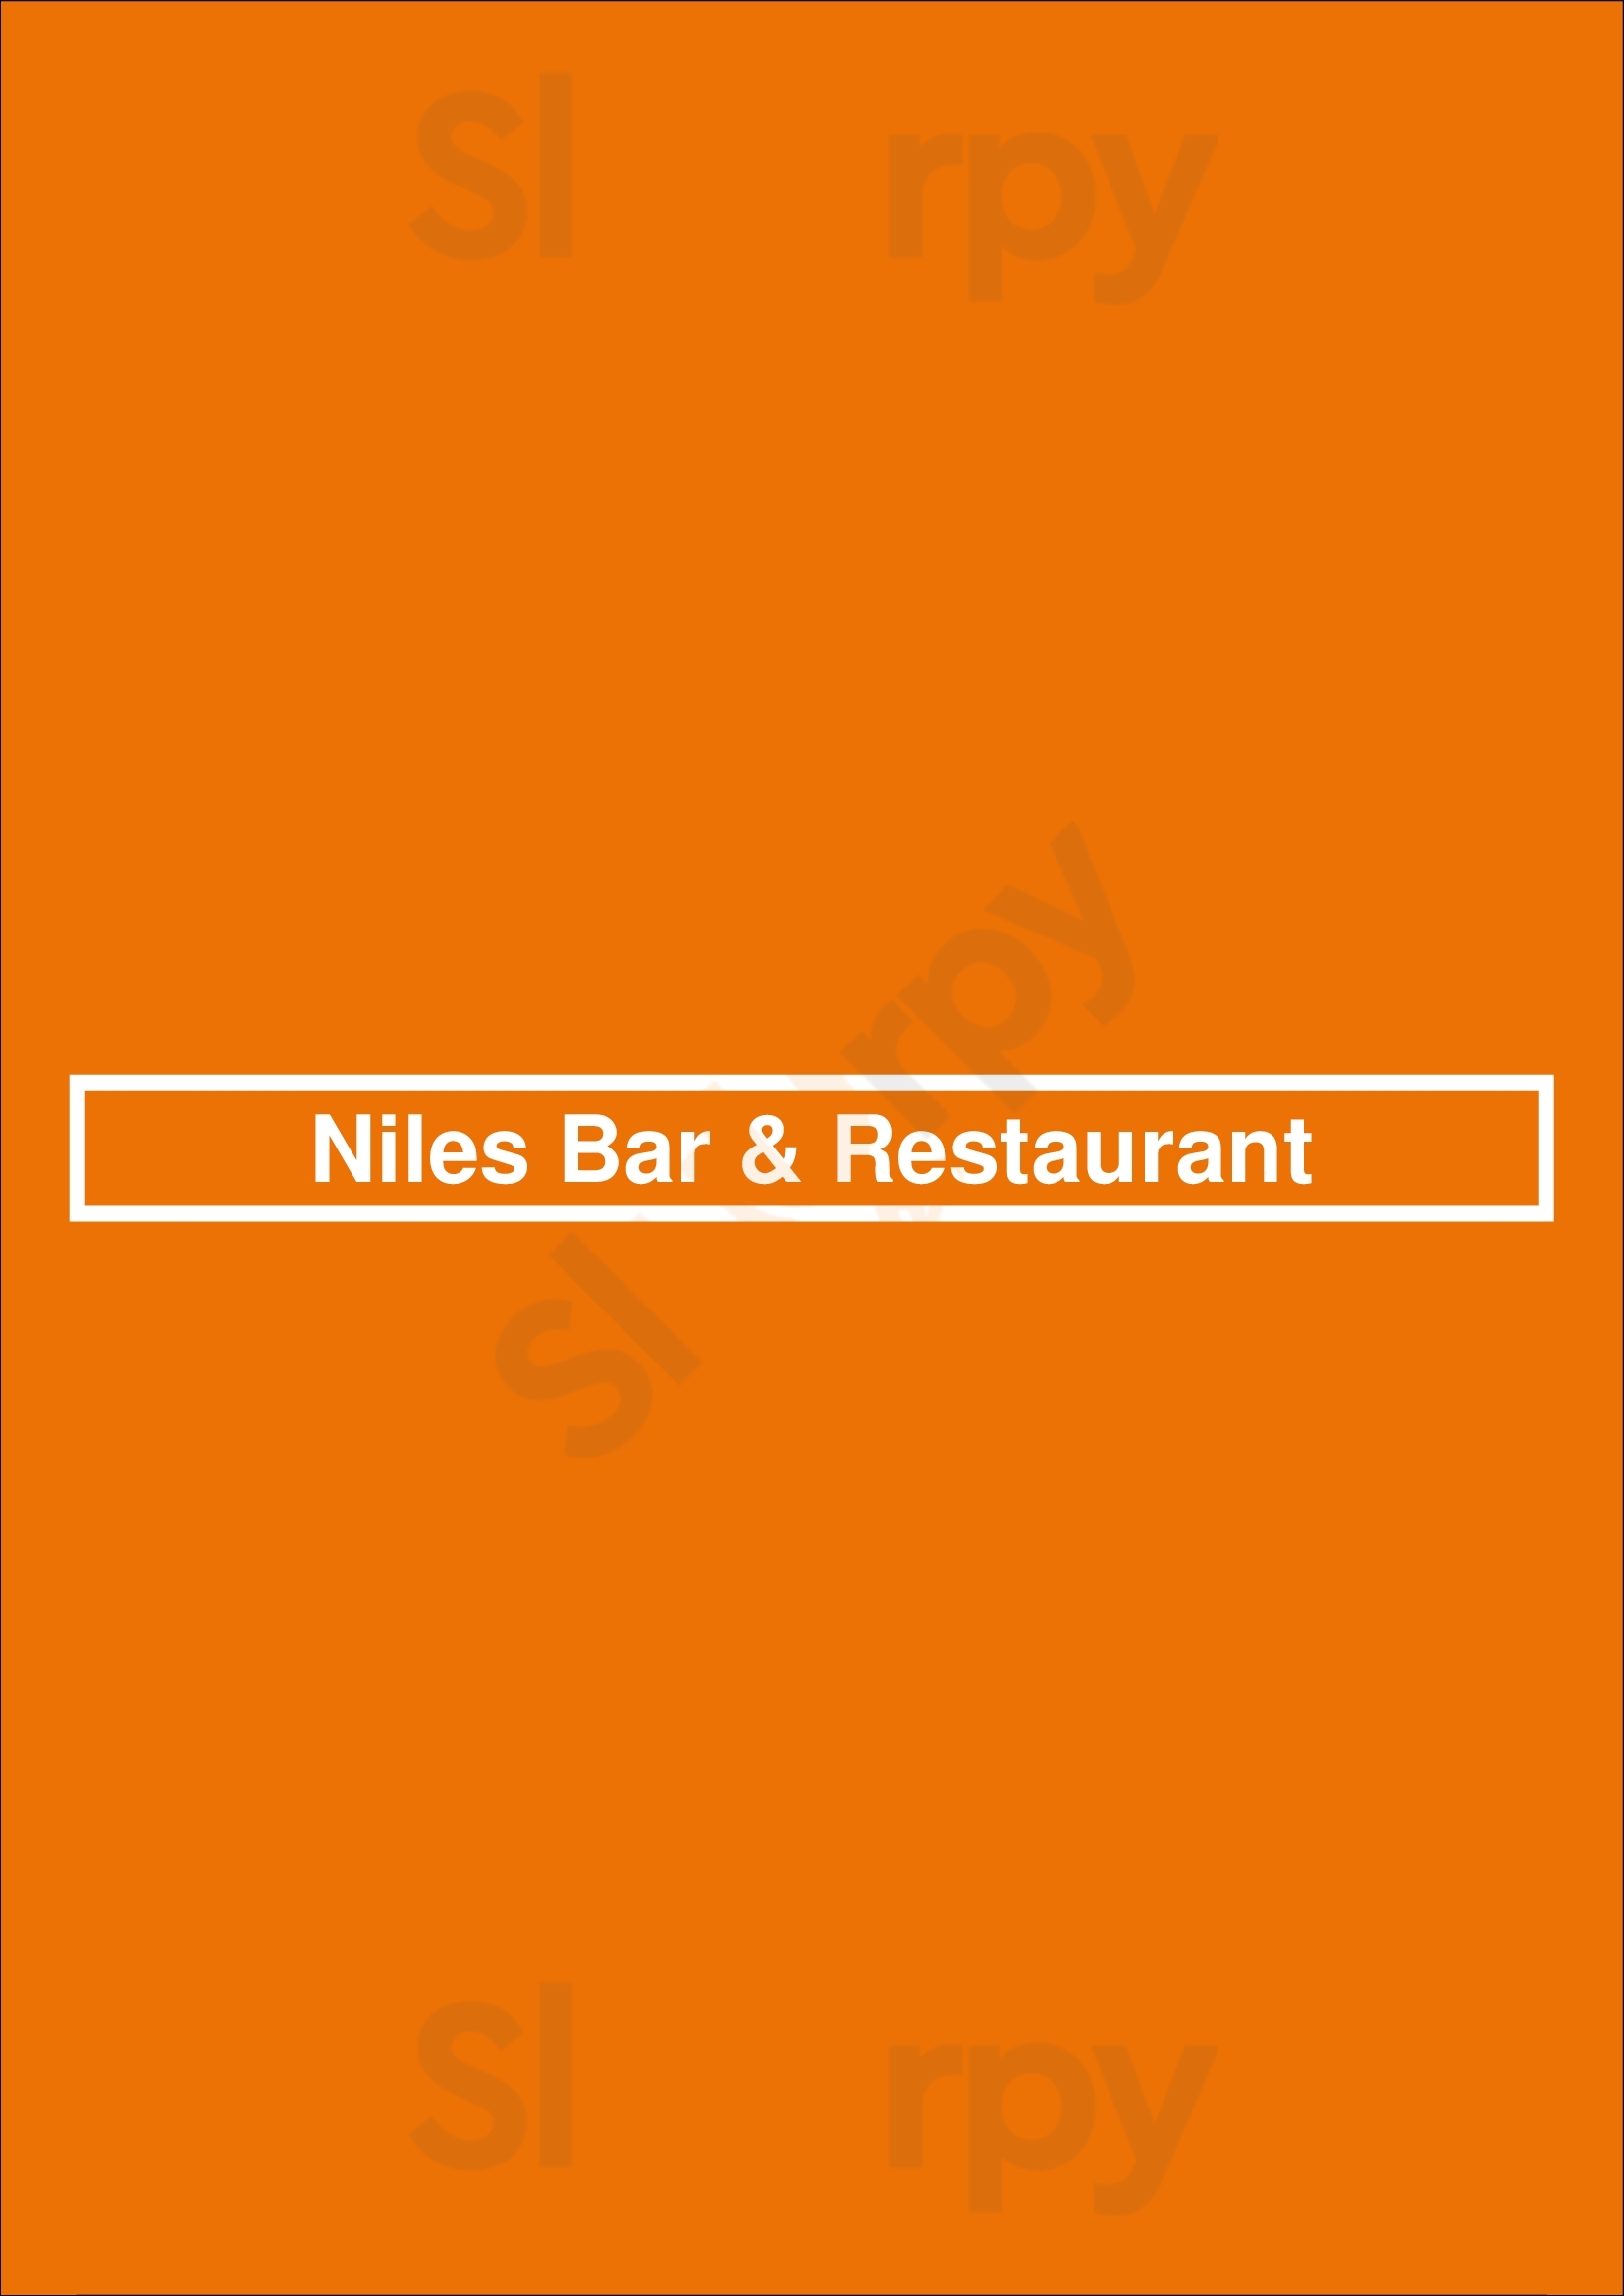 Niles Bar & Restaurant New York City Menu - 1